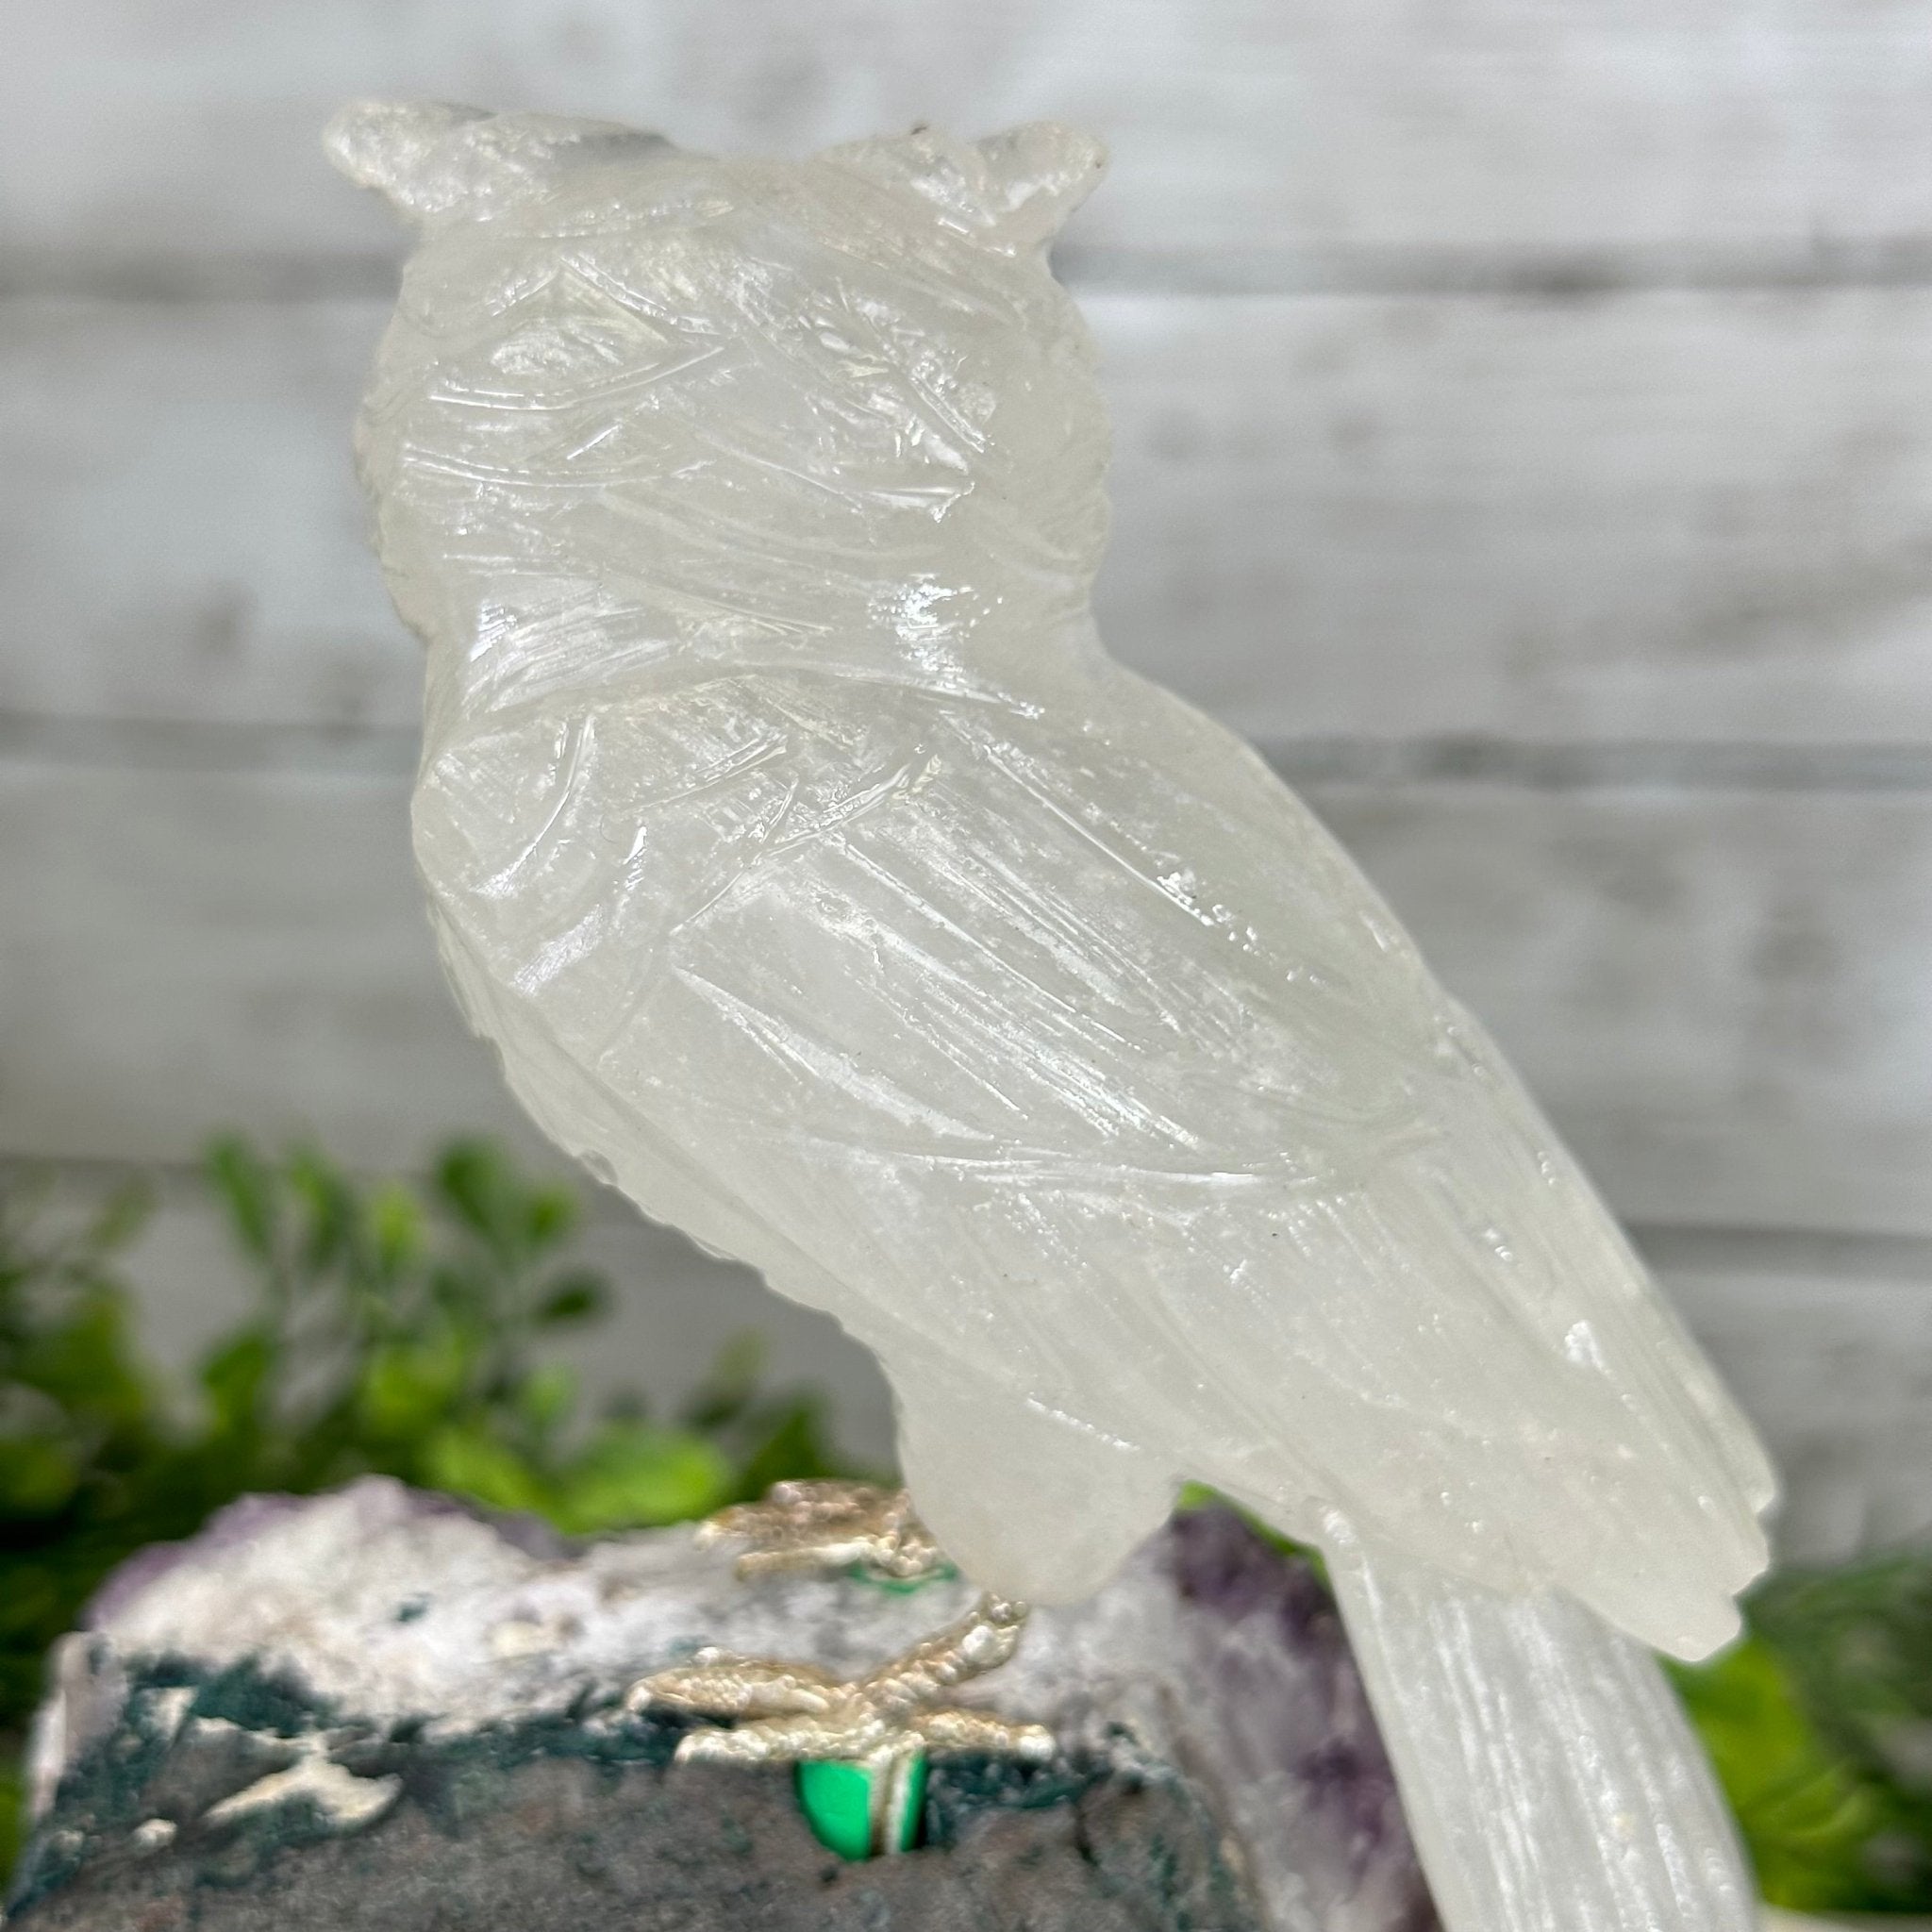 Hand-Carved Clear Quartz Owl Bird 7.25" Long on an Amethyst Base, #3004-CQOAM-048 - Brazil GemsBrazil GemsHand-Carved Clear Quartz Owl Bird 7.25" Long on an Amethyst Base, #3004-CQOAM-048Crystal Birds3004-CQOAM-048